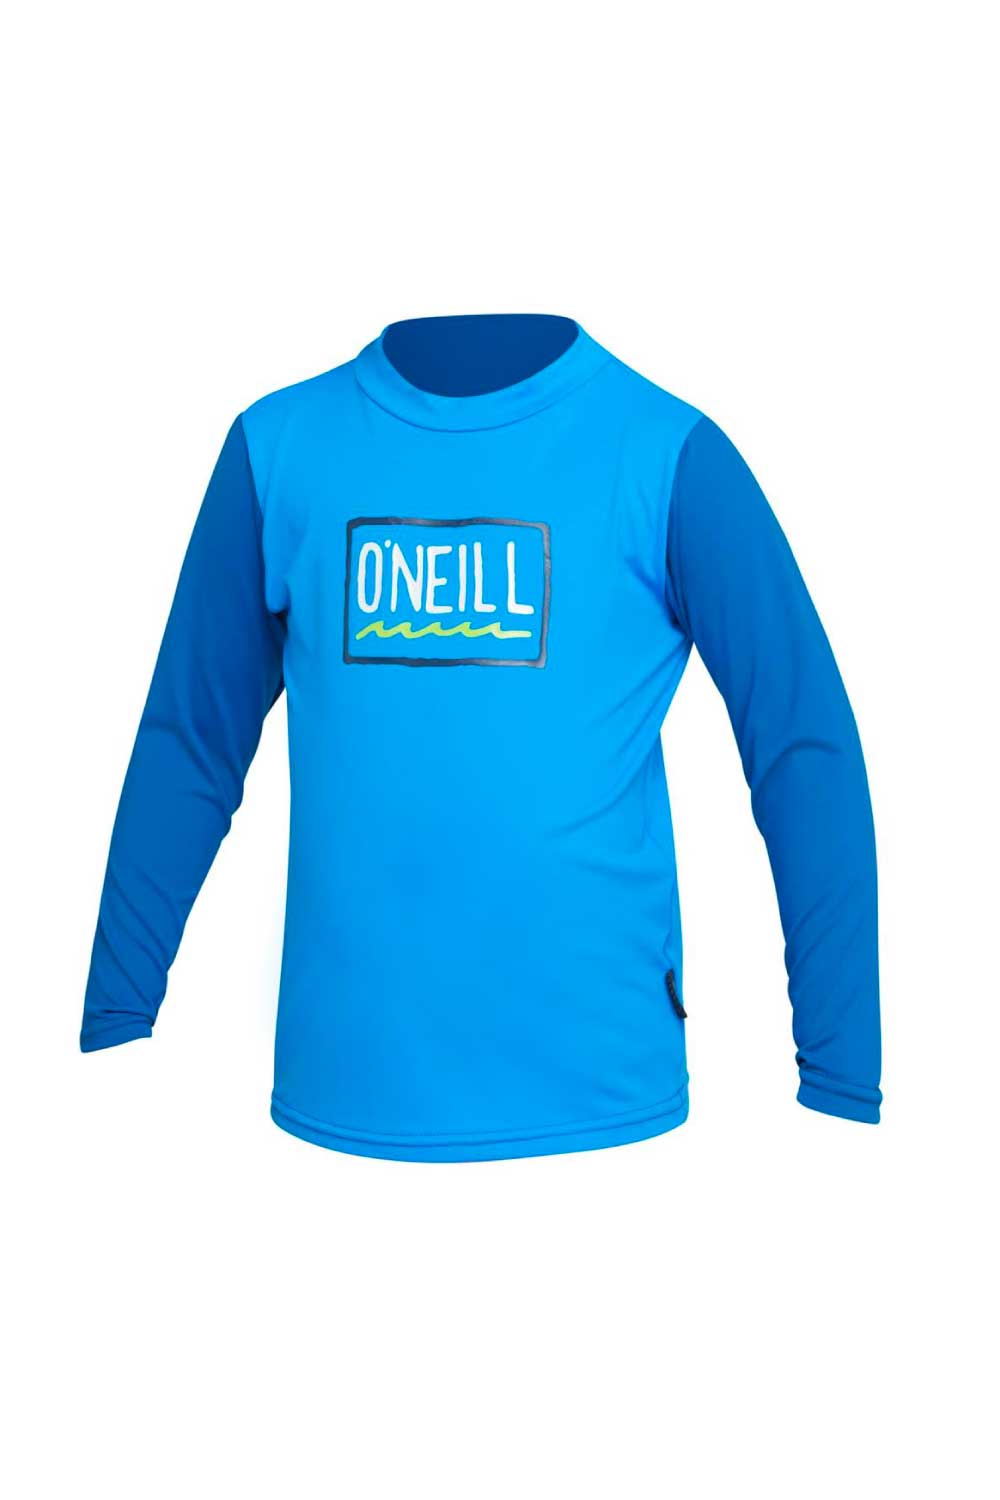 O'Neill Toddler Skins Long Sleeve Rash Vest - Brite Blue